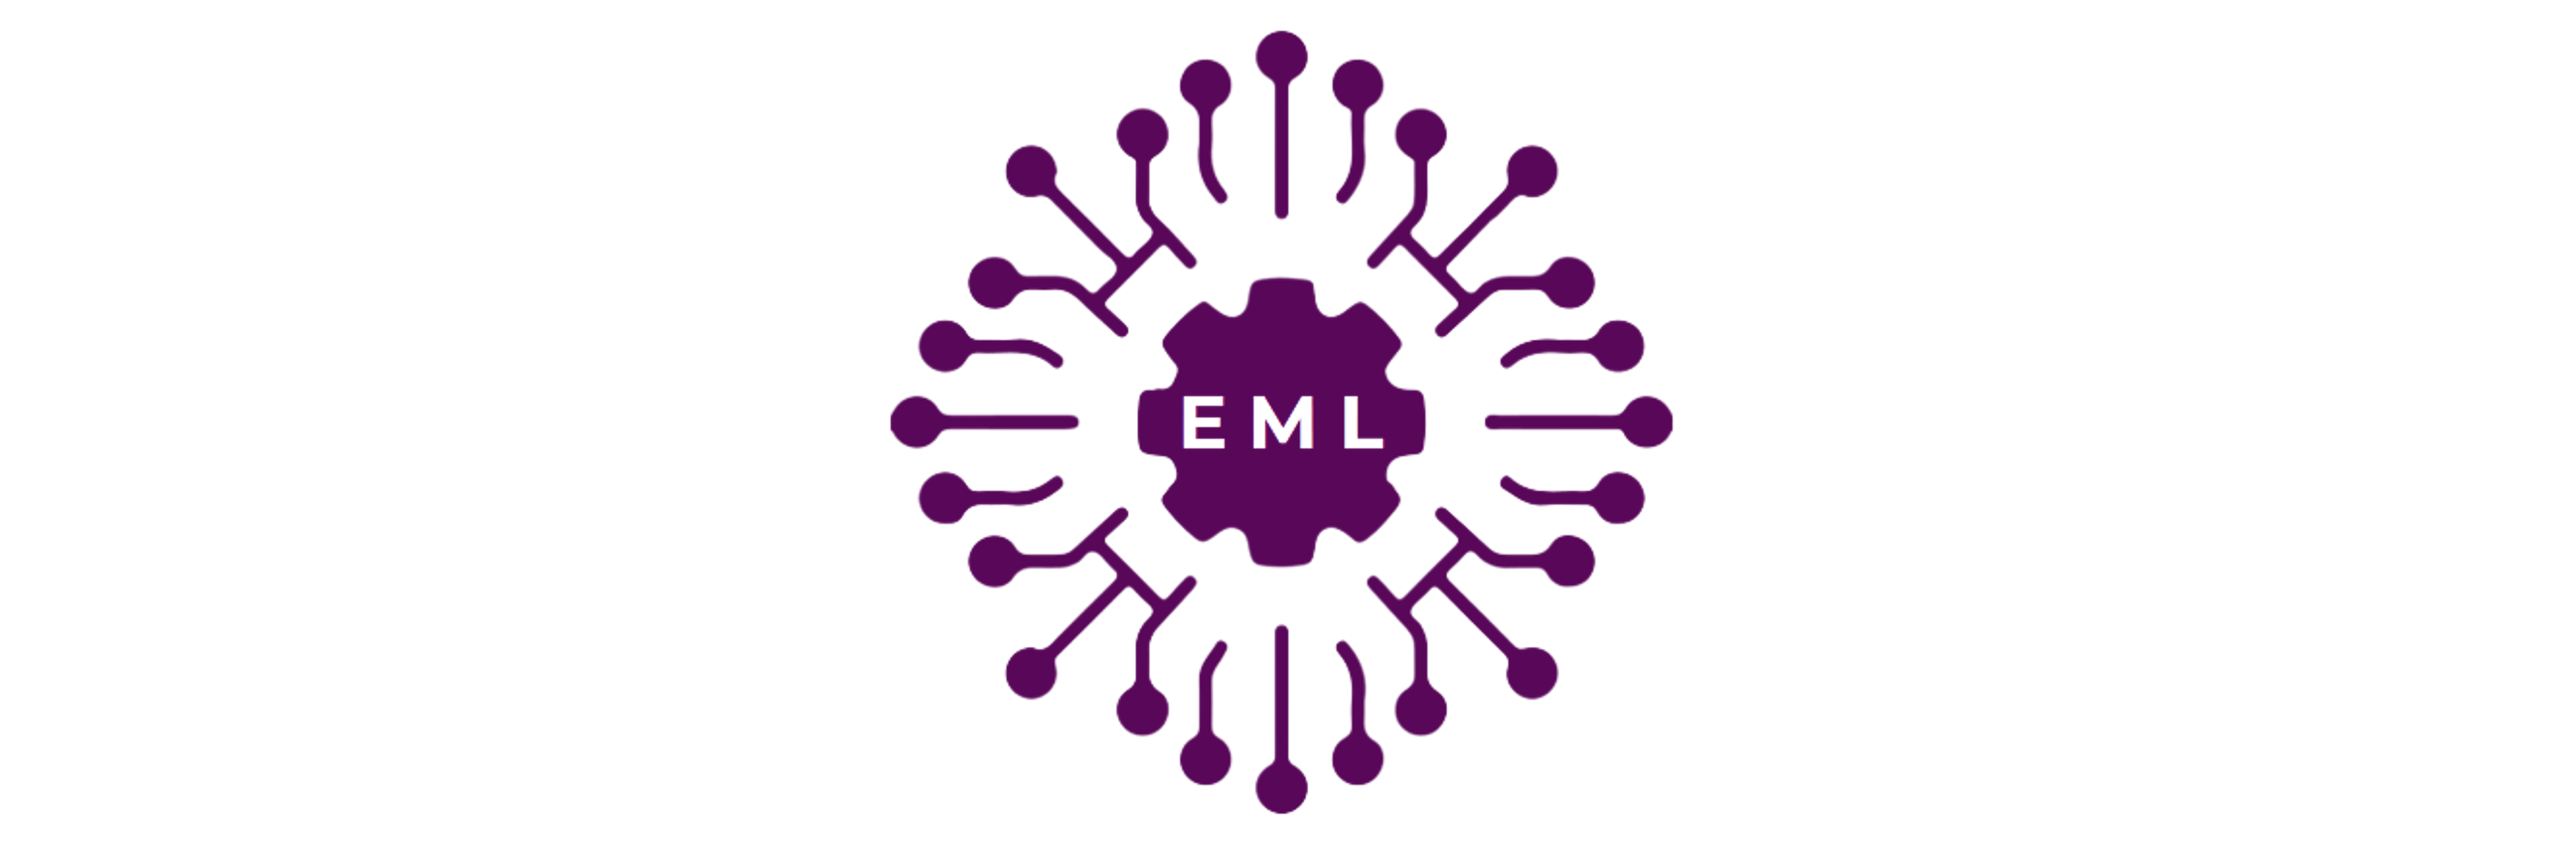 EML Logo